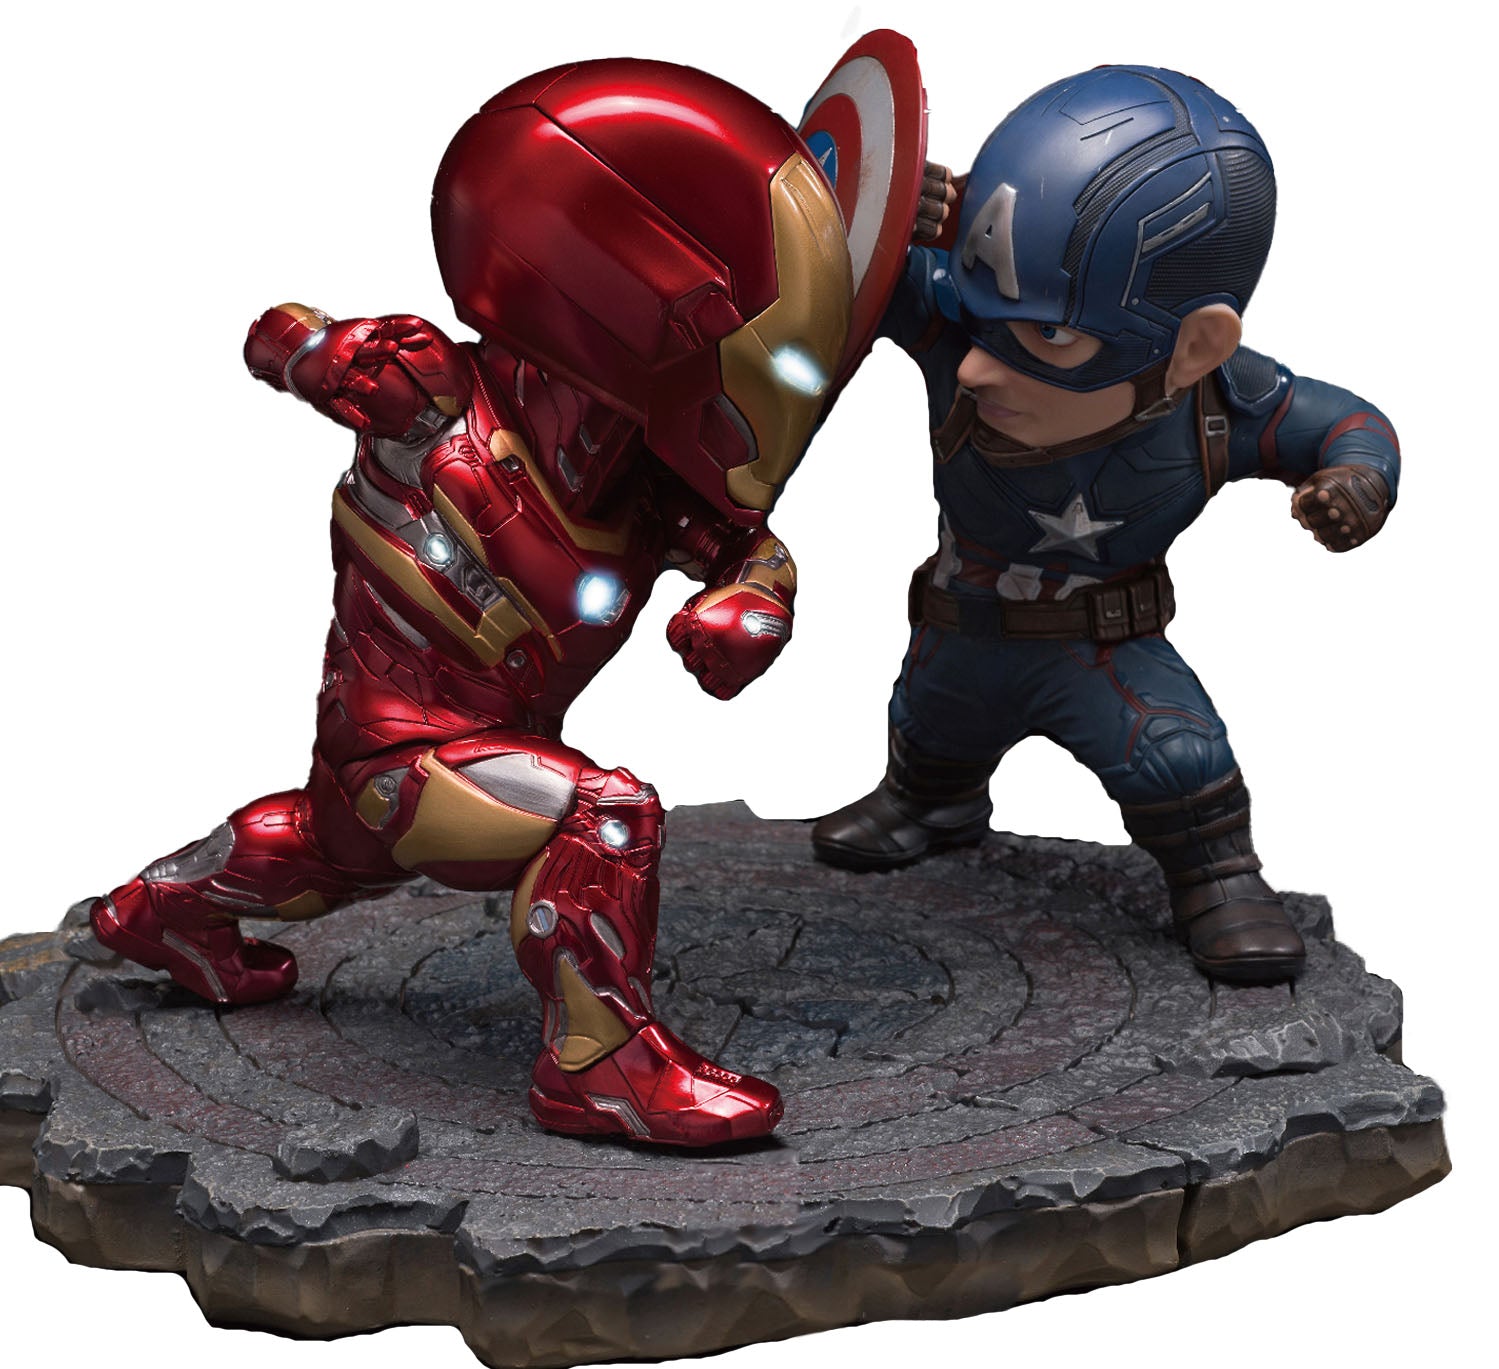 Captain America vs. Iron Man Toy Set